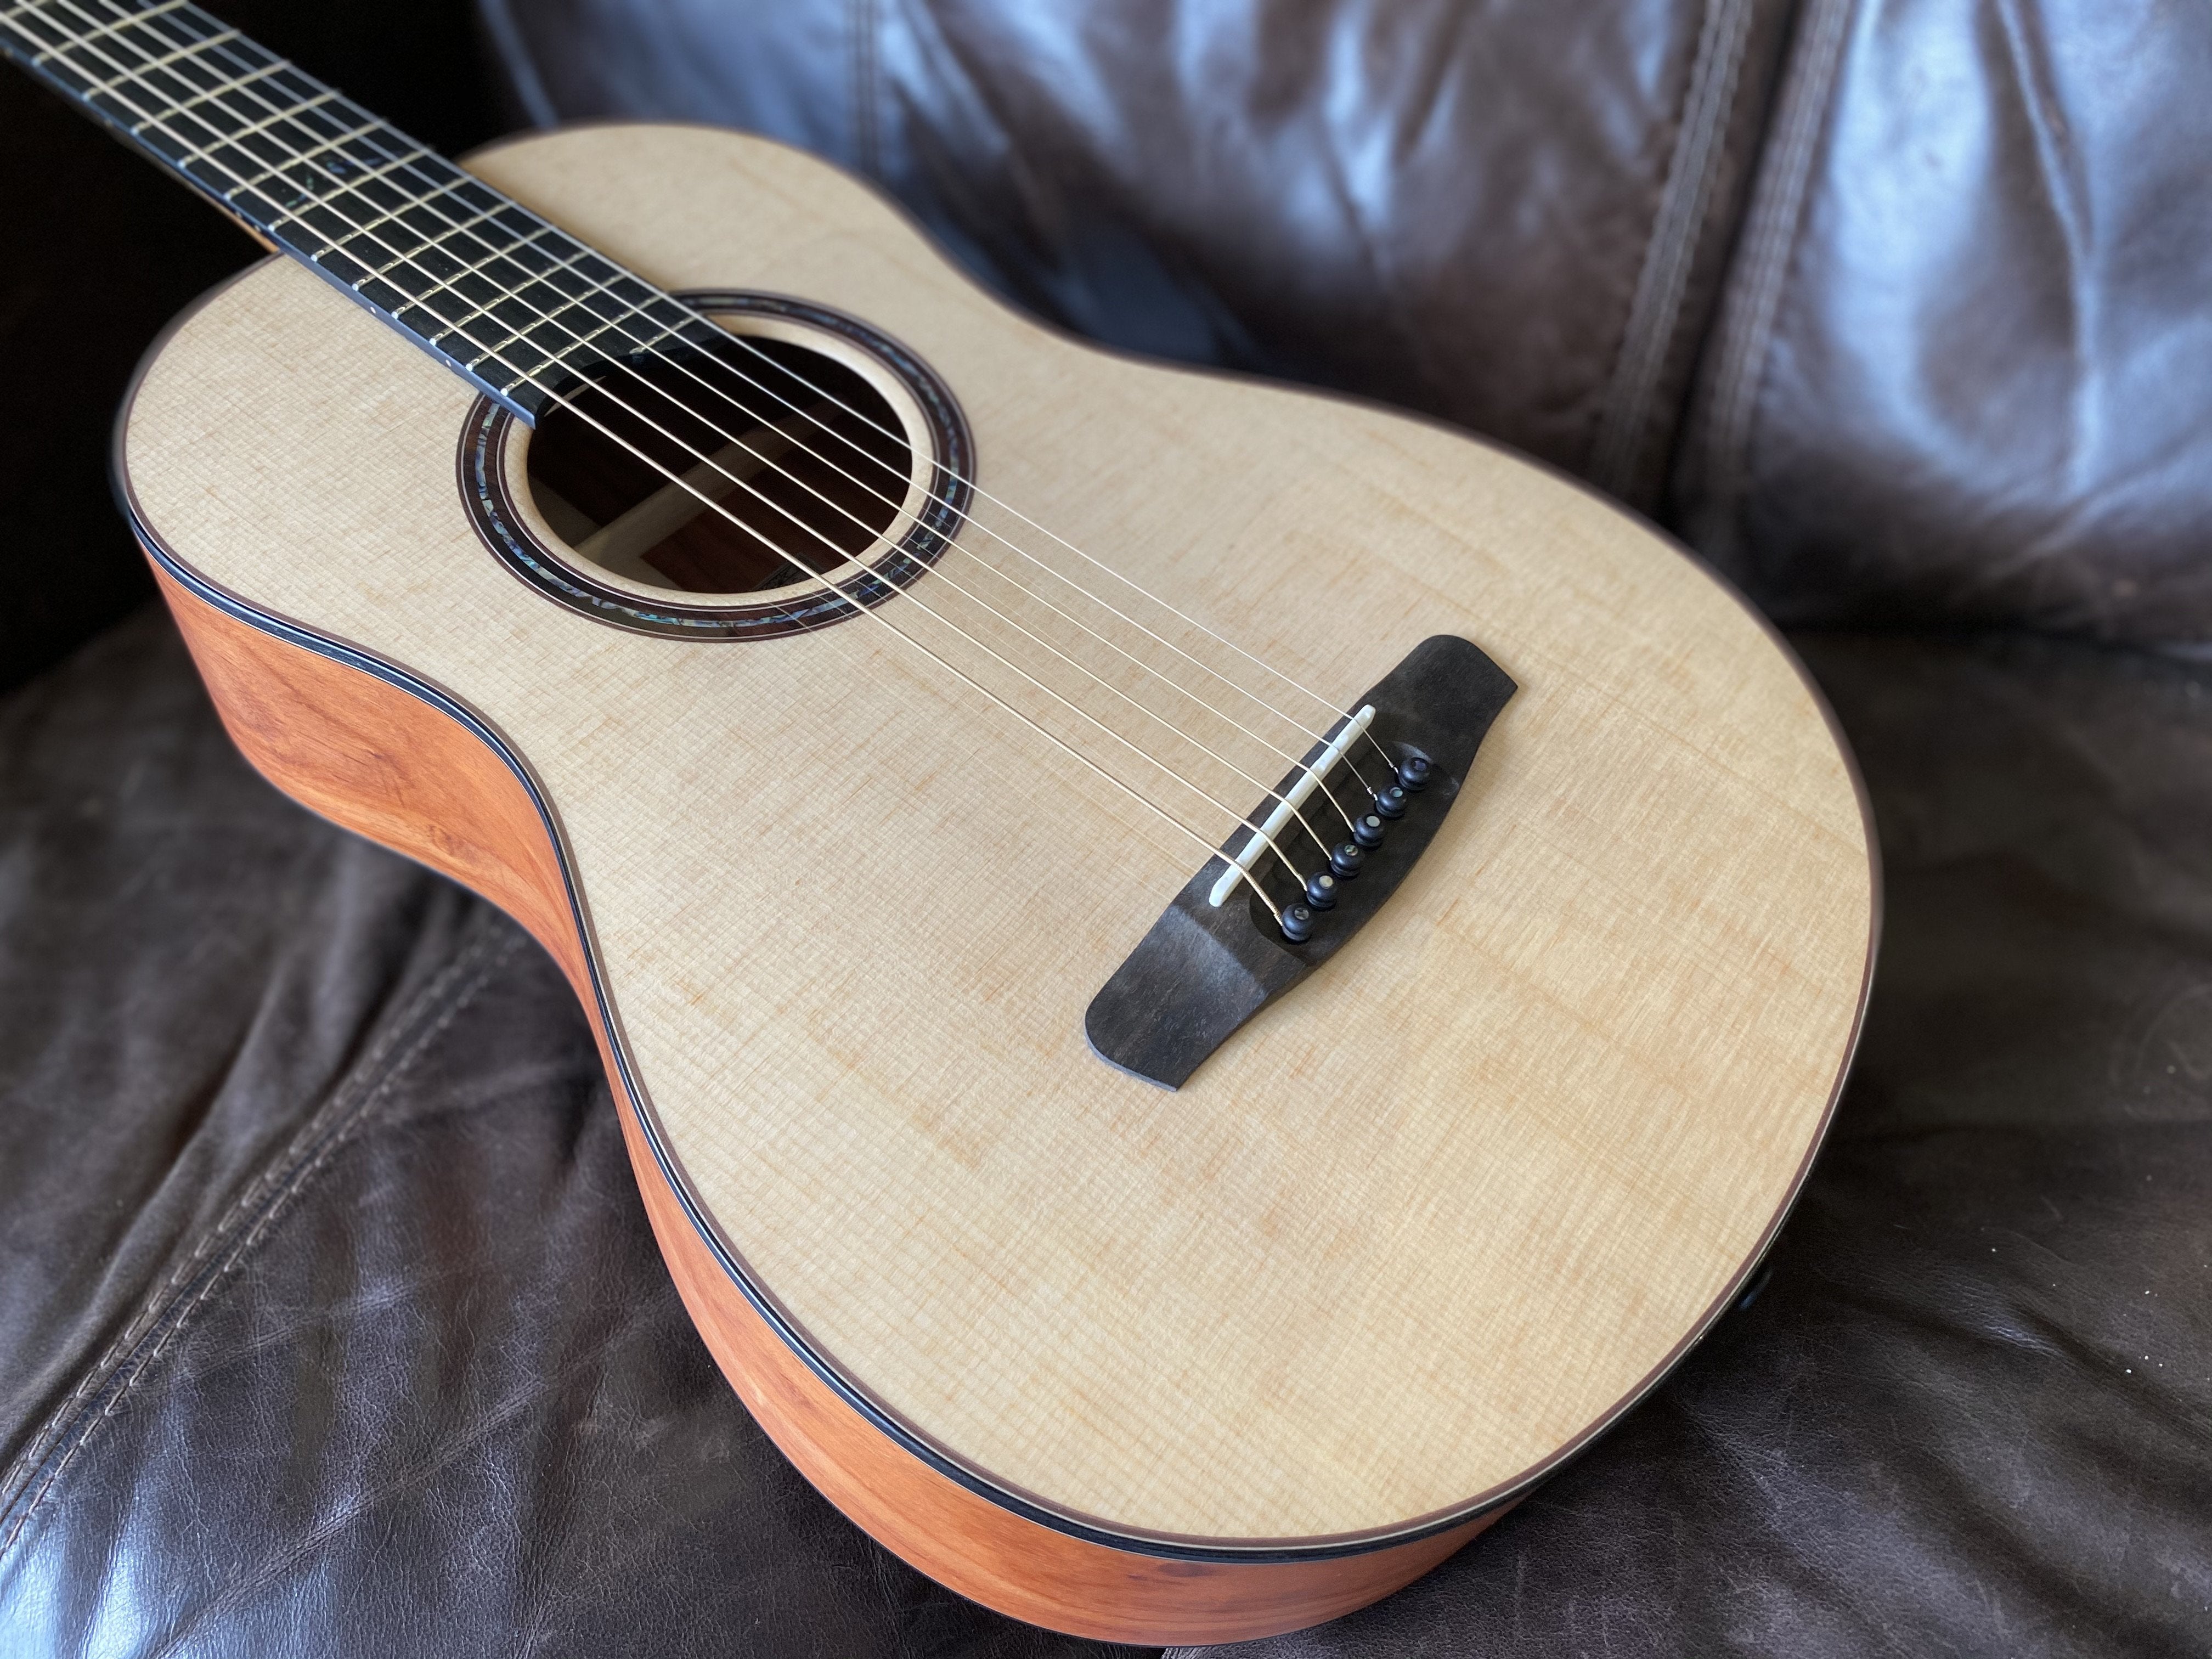 Dowina Merlot BV Spruce / Macacauba Parlor Guitar, Acoustic Guitar for sale at Richards Guitars.